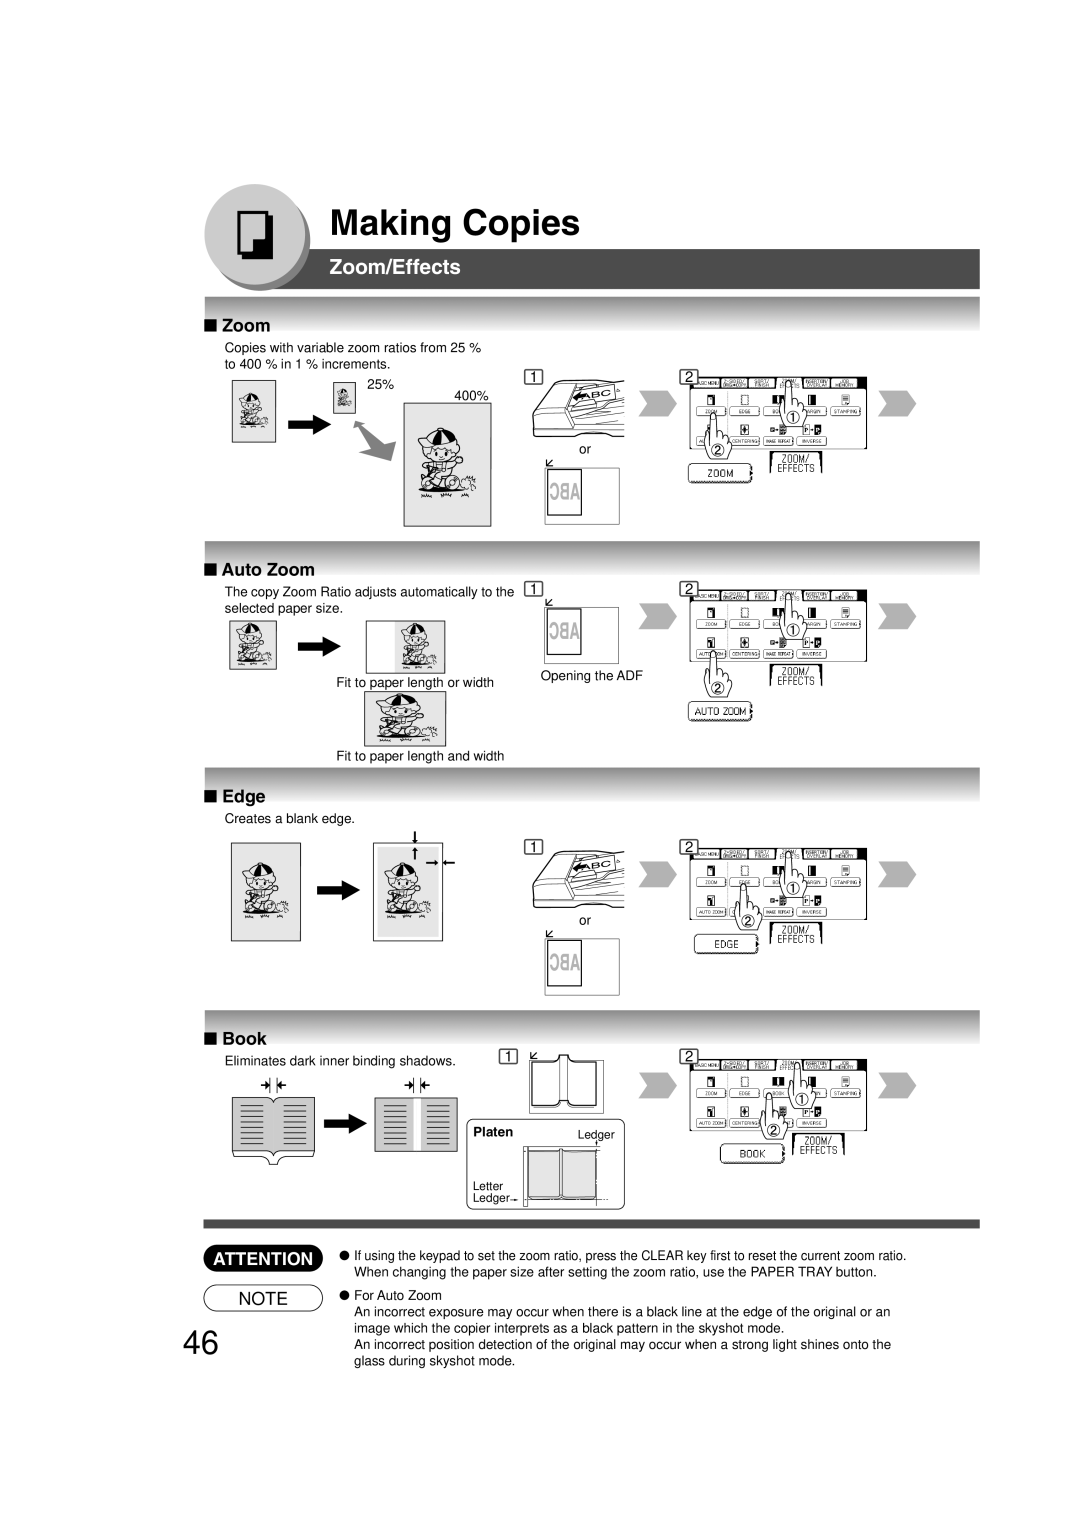 Panasonic 4520, 6020 manual Zoom/Effects, Auto Zoom, Edge, Book, Making Copies 